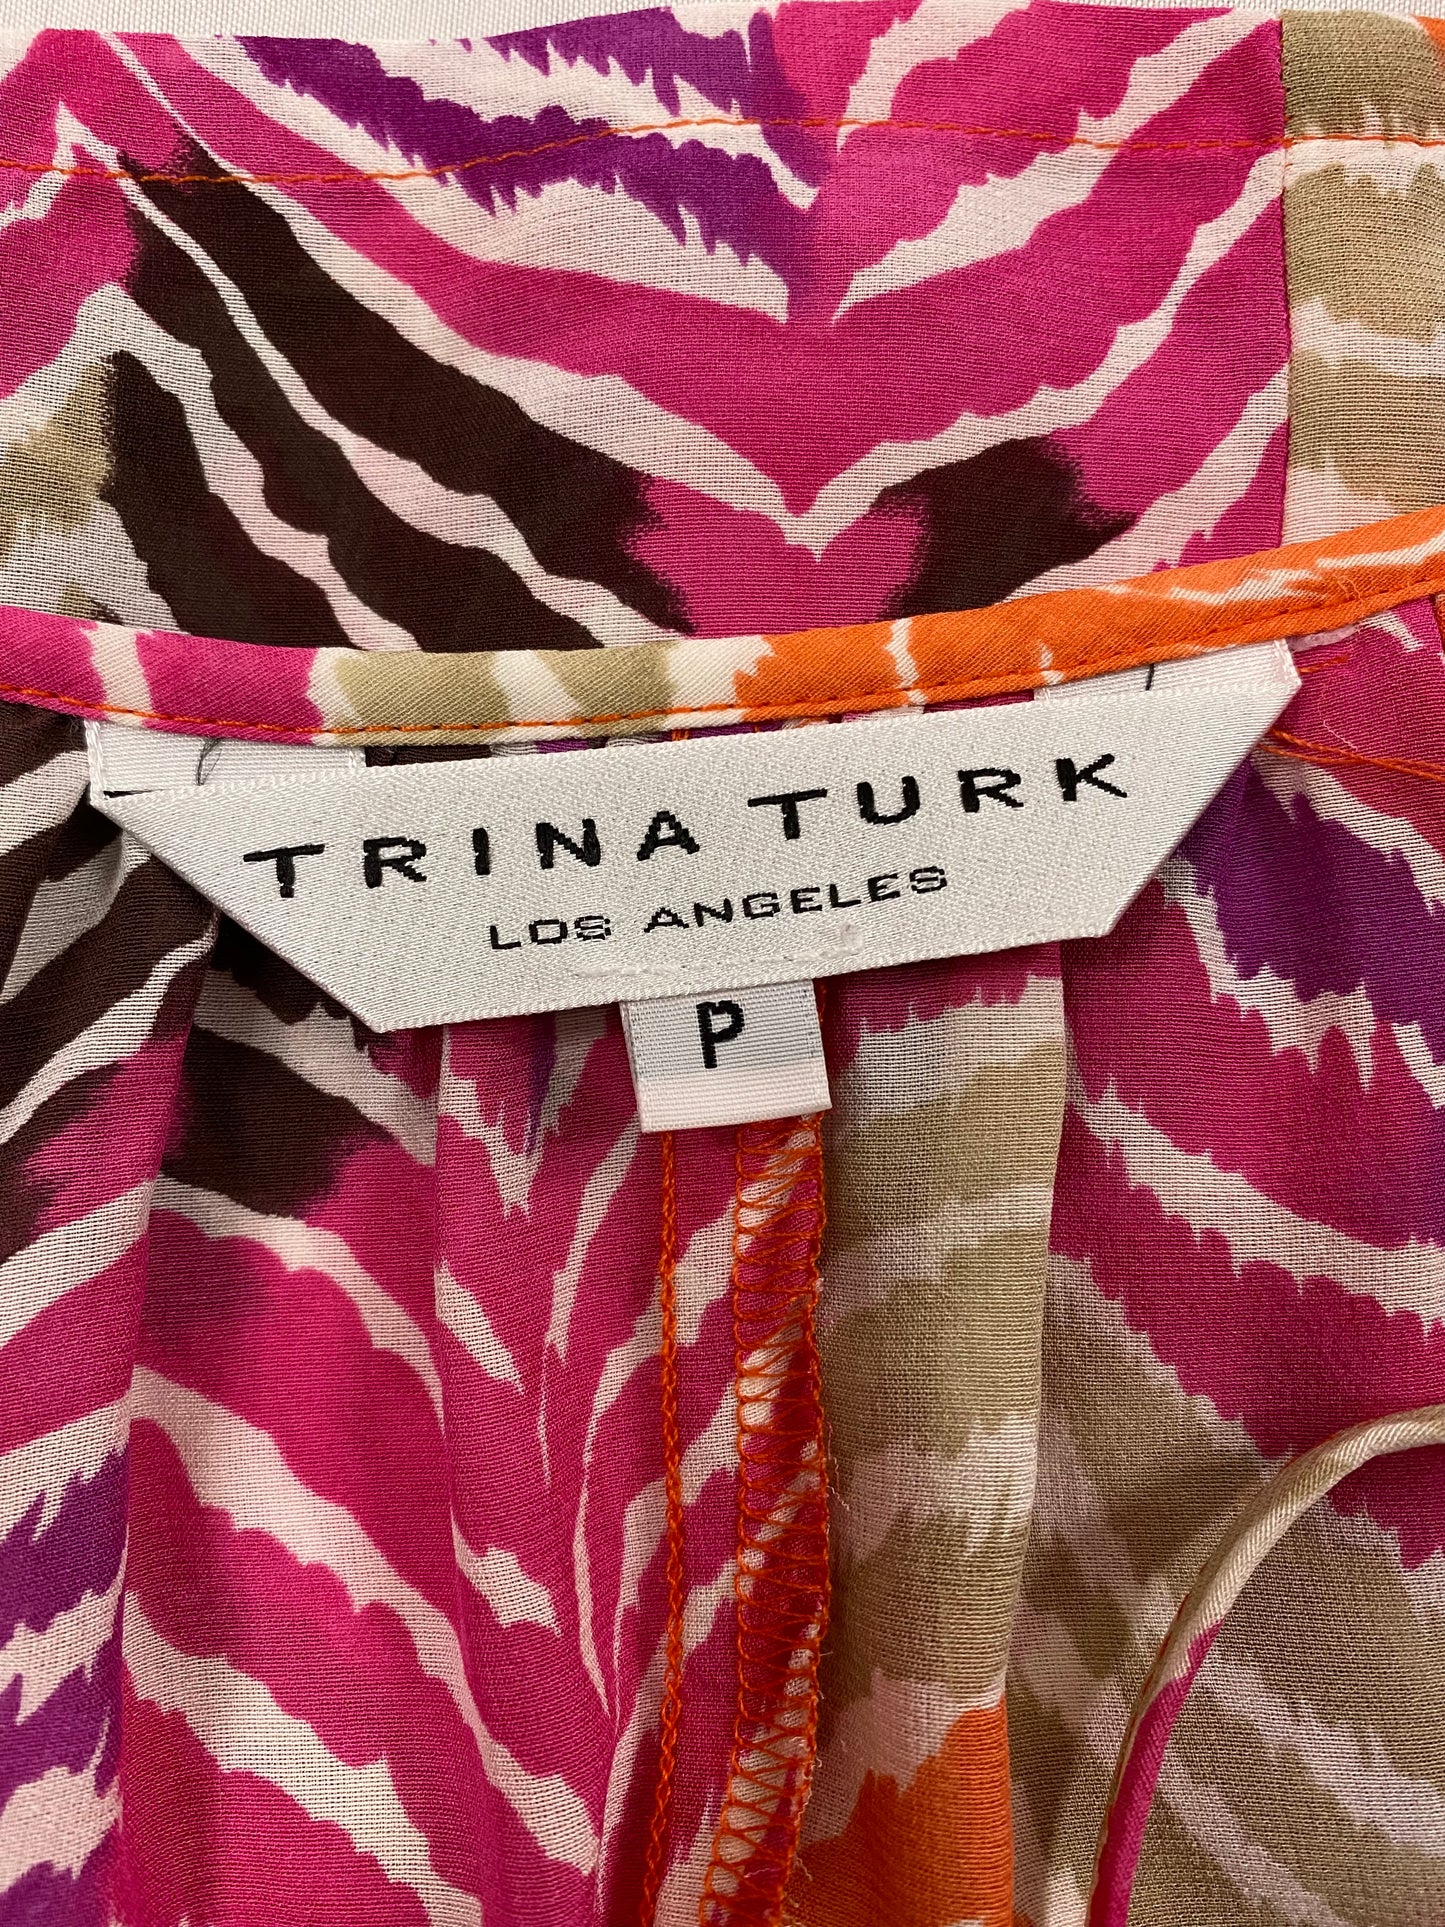 TRINA TURK Blouse, Silk Fuchsia and Orange Patterned Size P SKU 000363-10